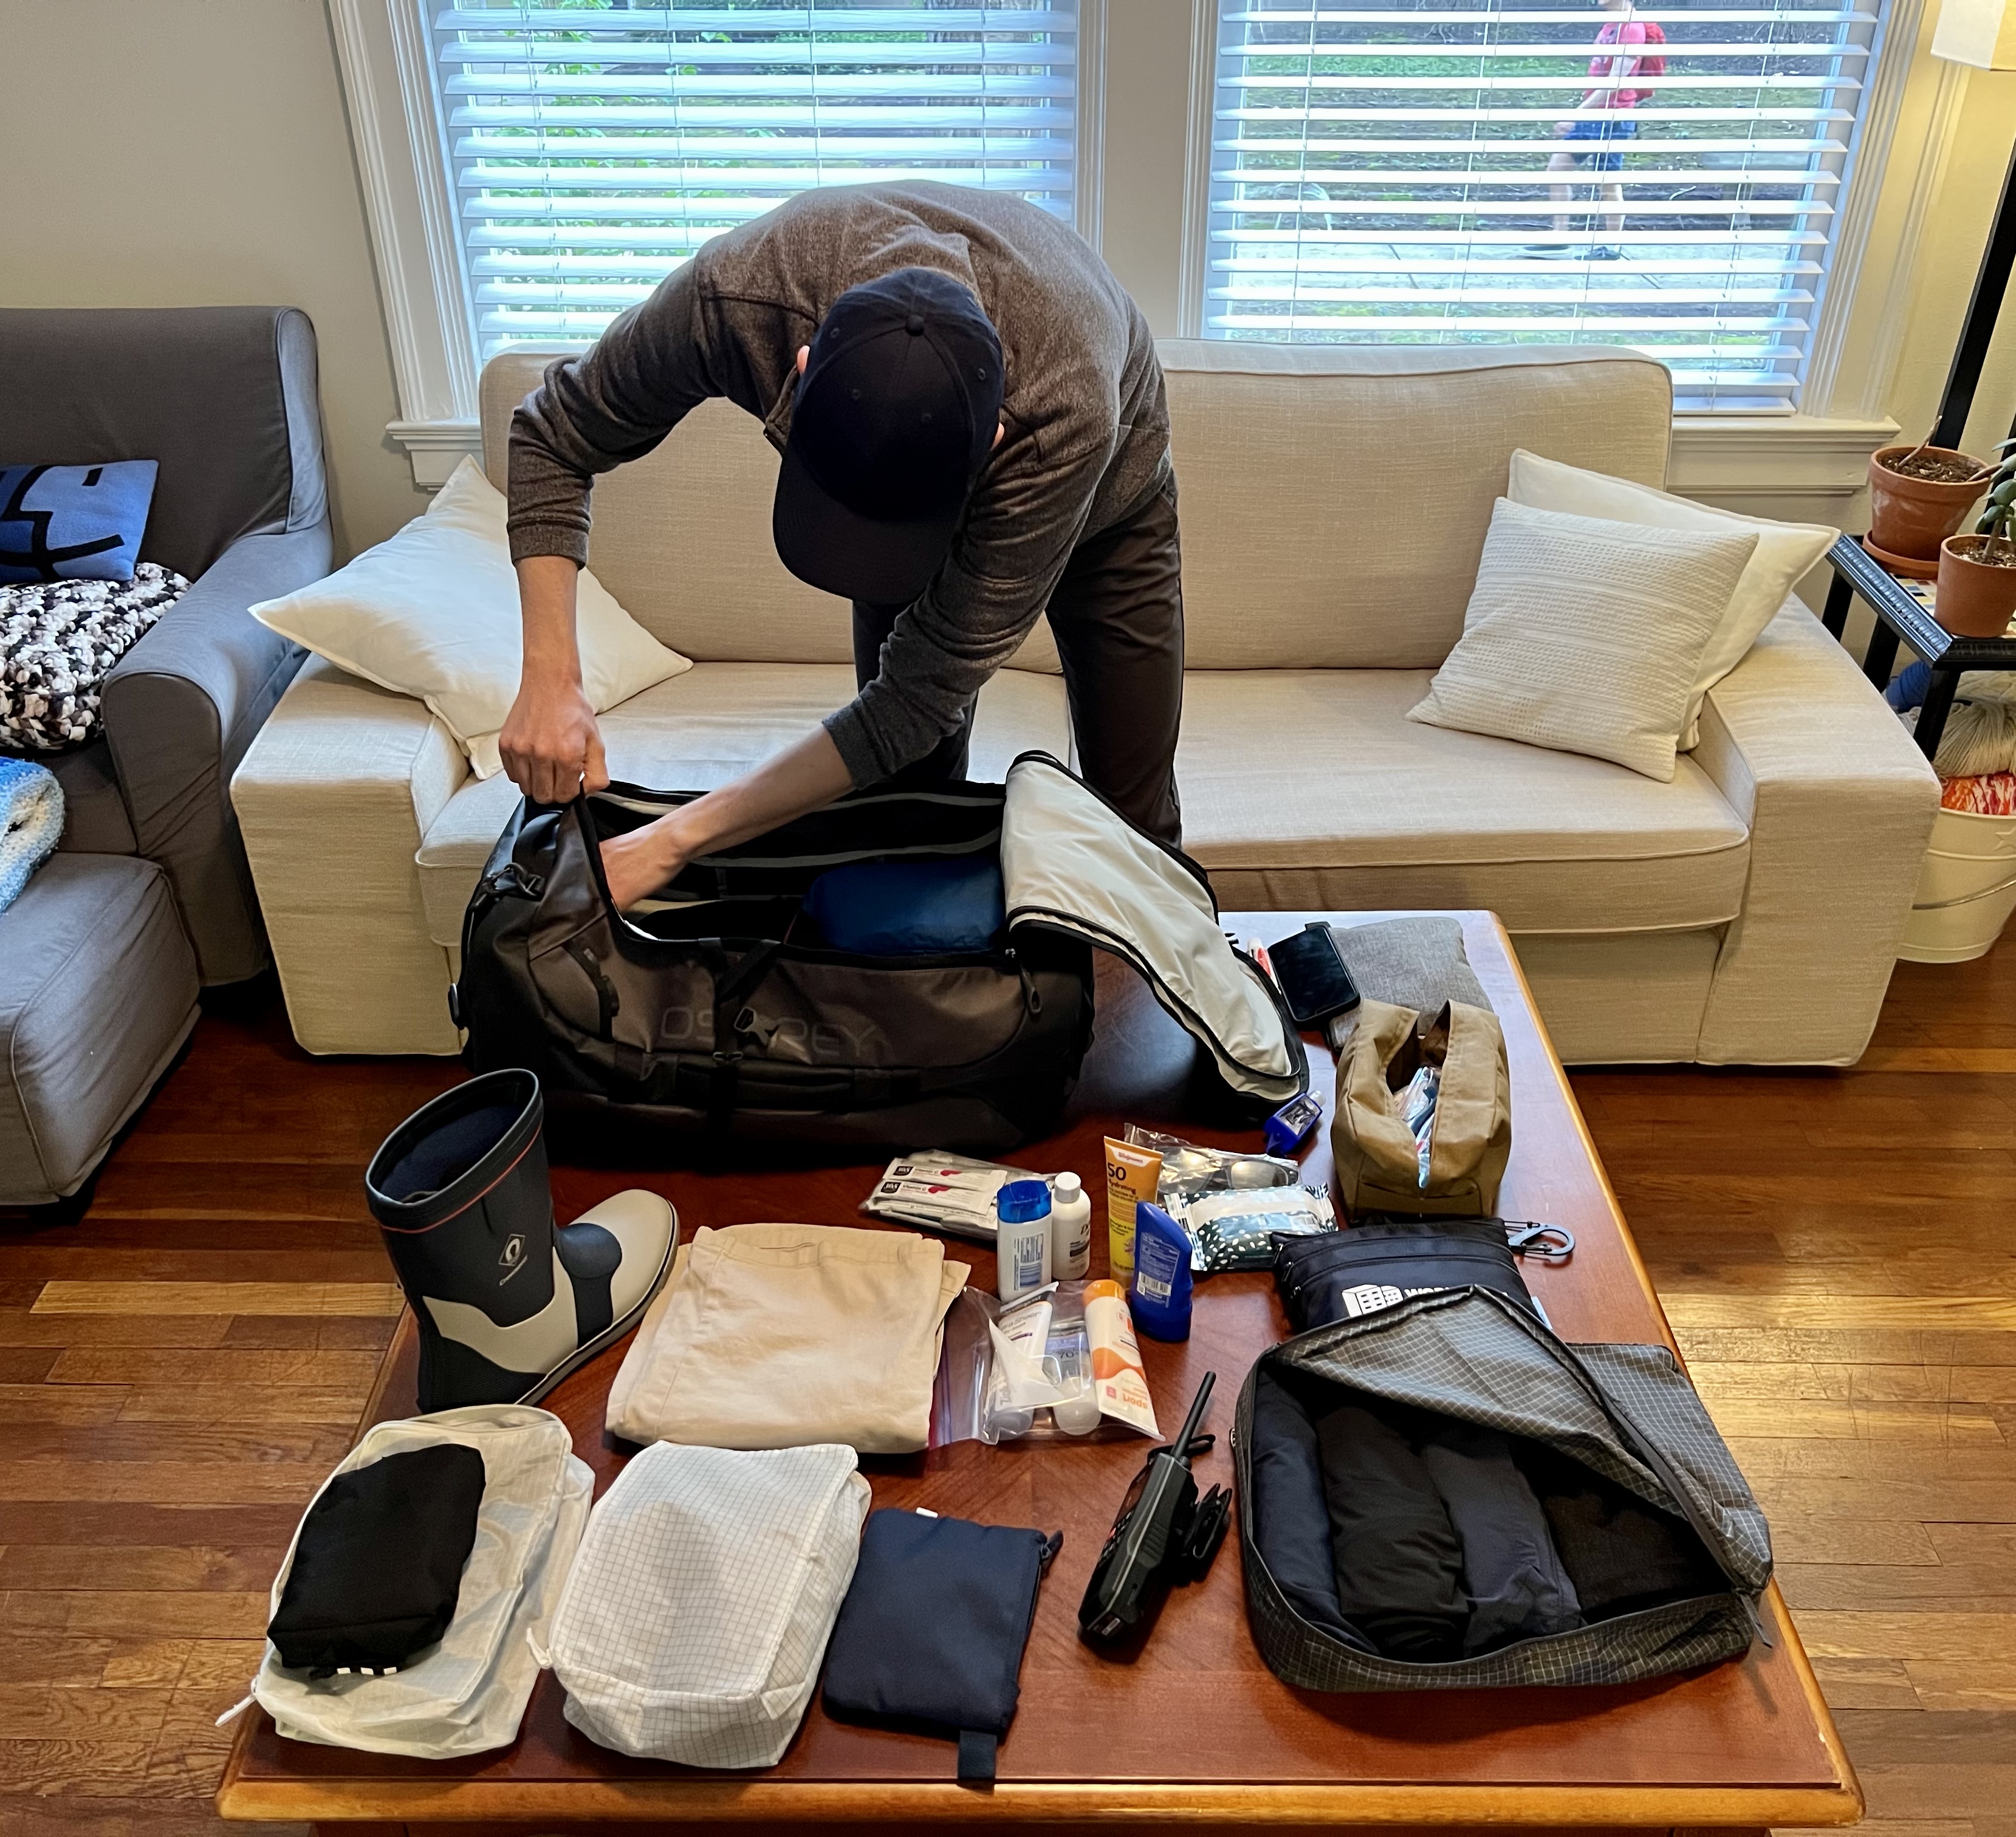 Jacob packing